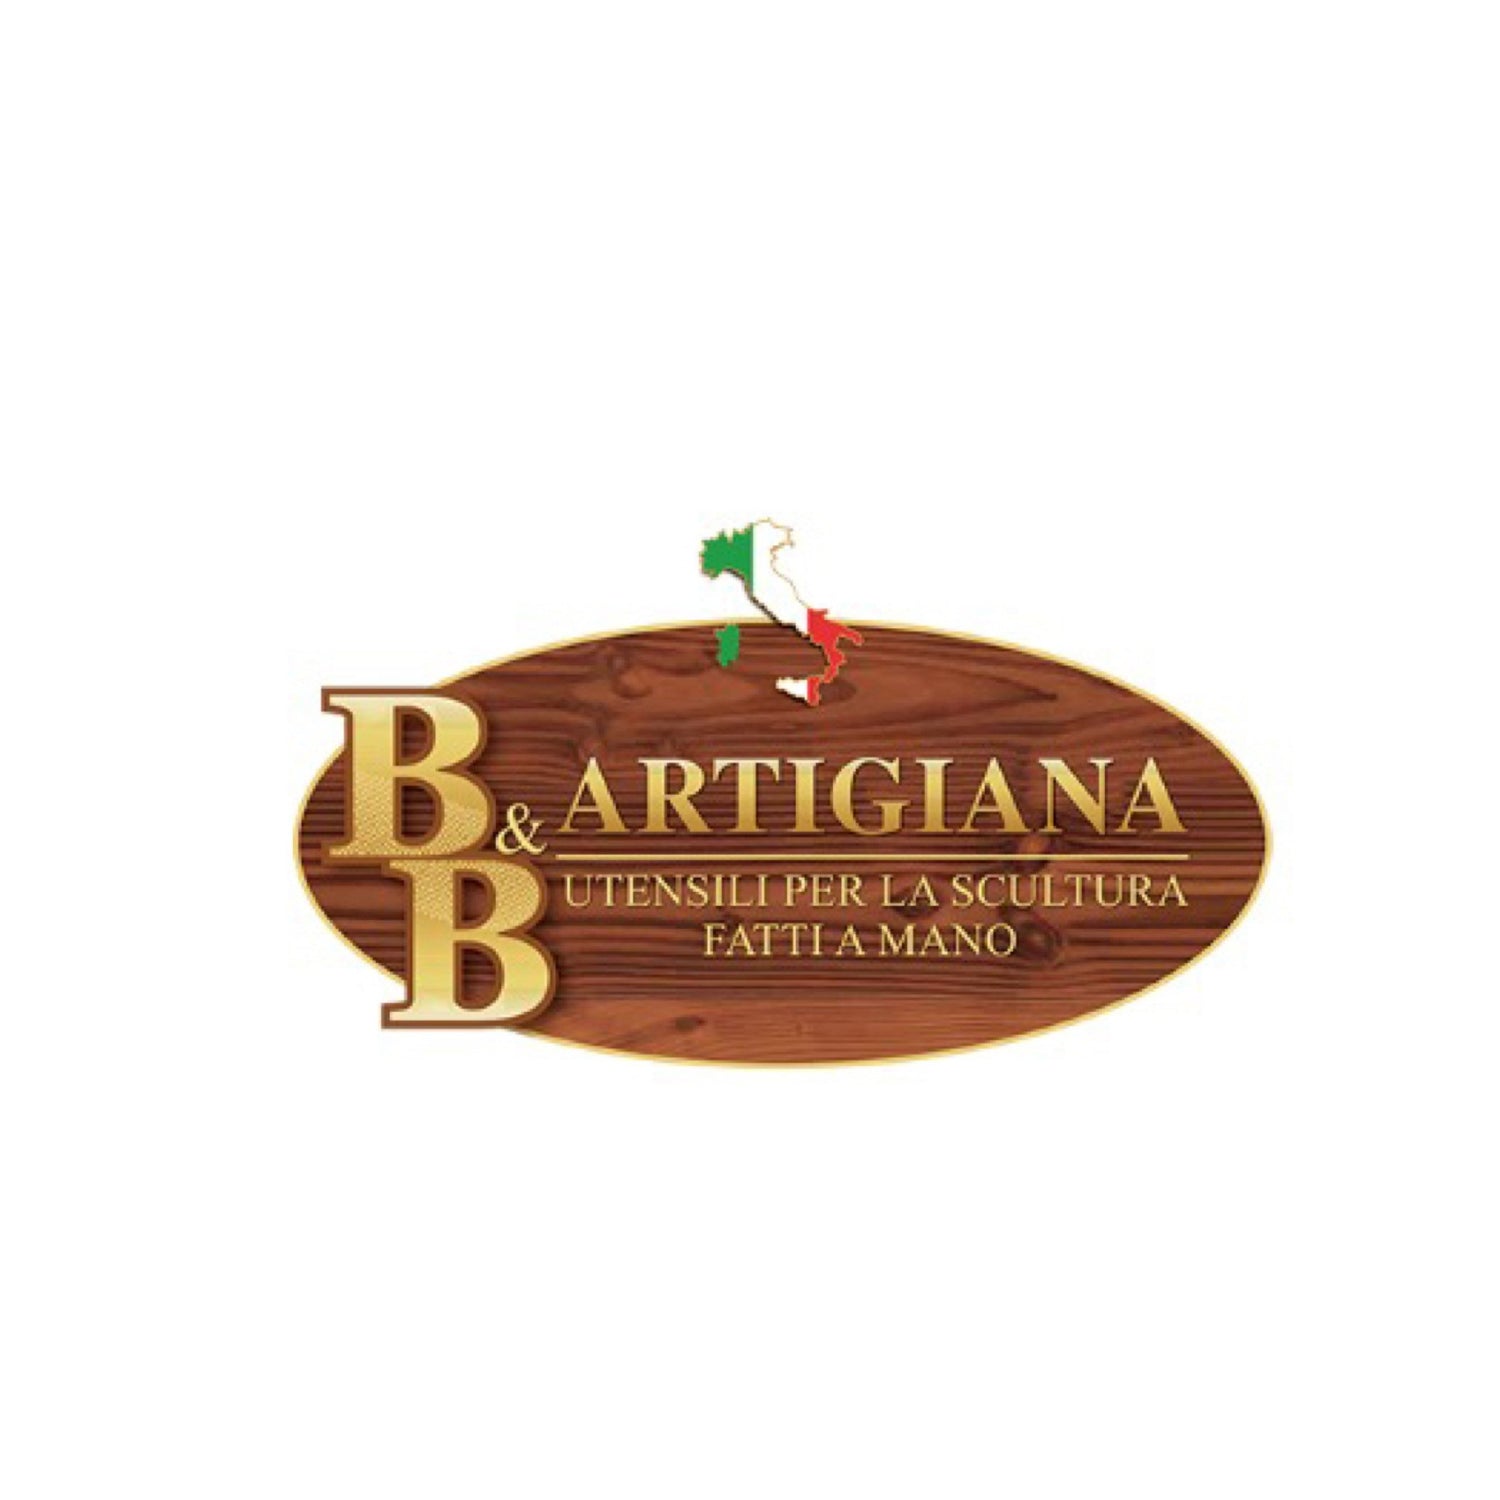 B & B Artigiana - Sculpture House